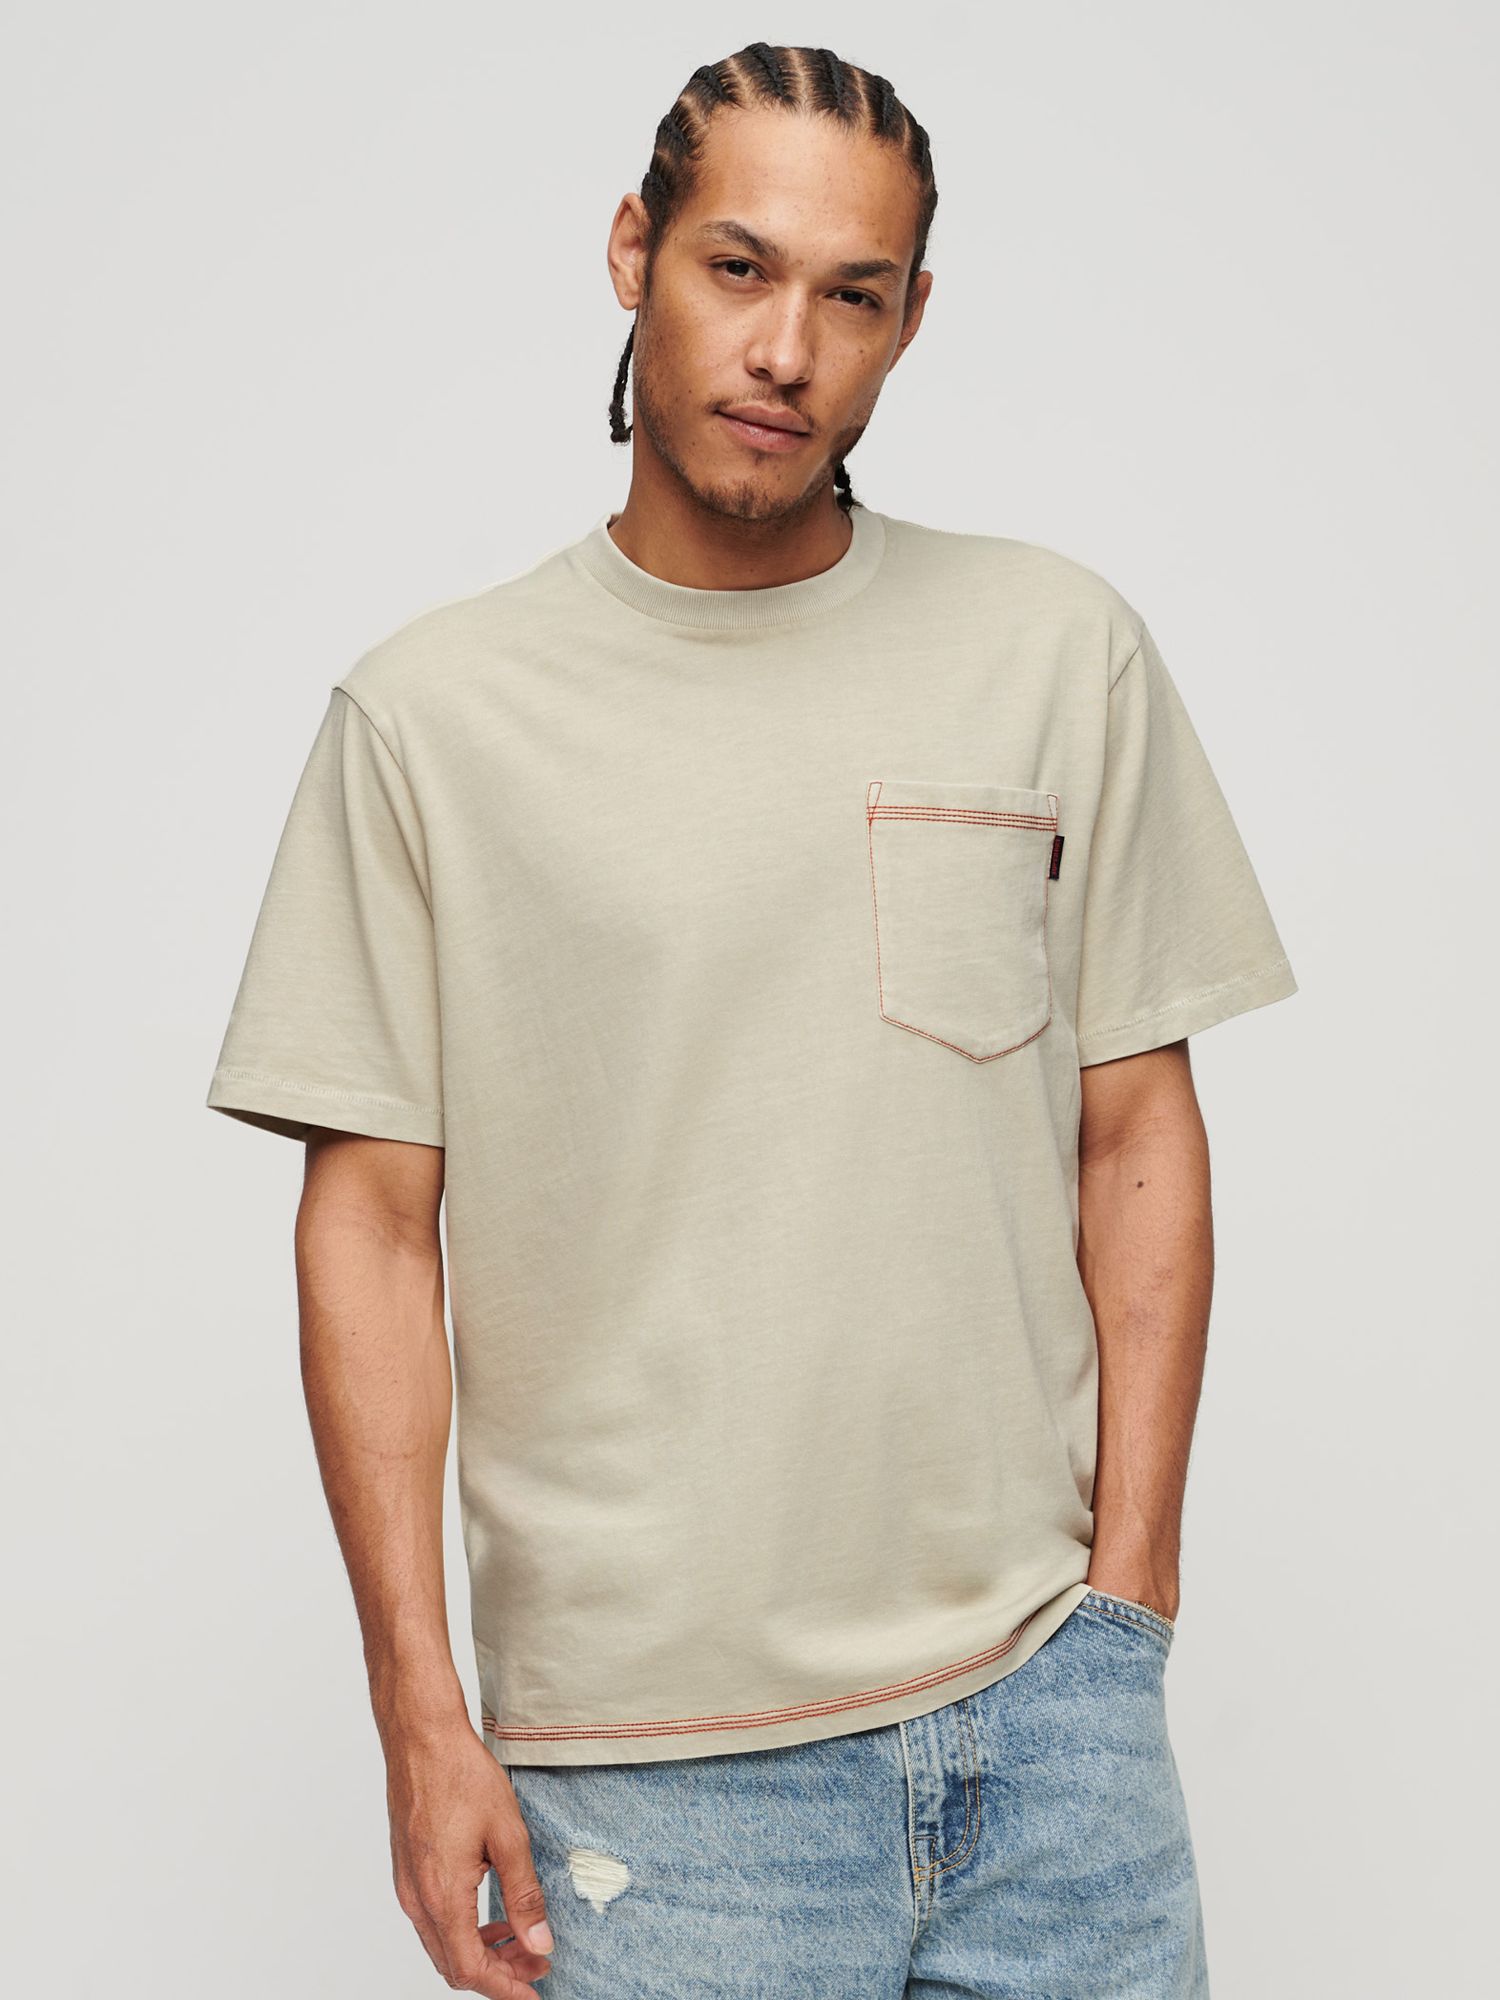 Superdry Contrast Stitch Pocket T-Shirt, Pelican Beige, L